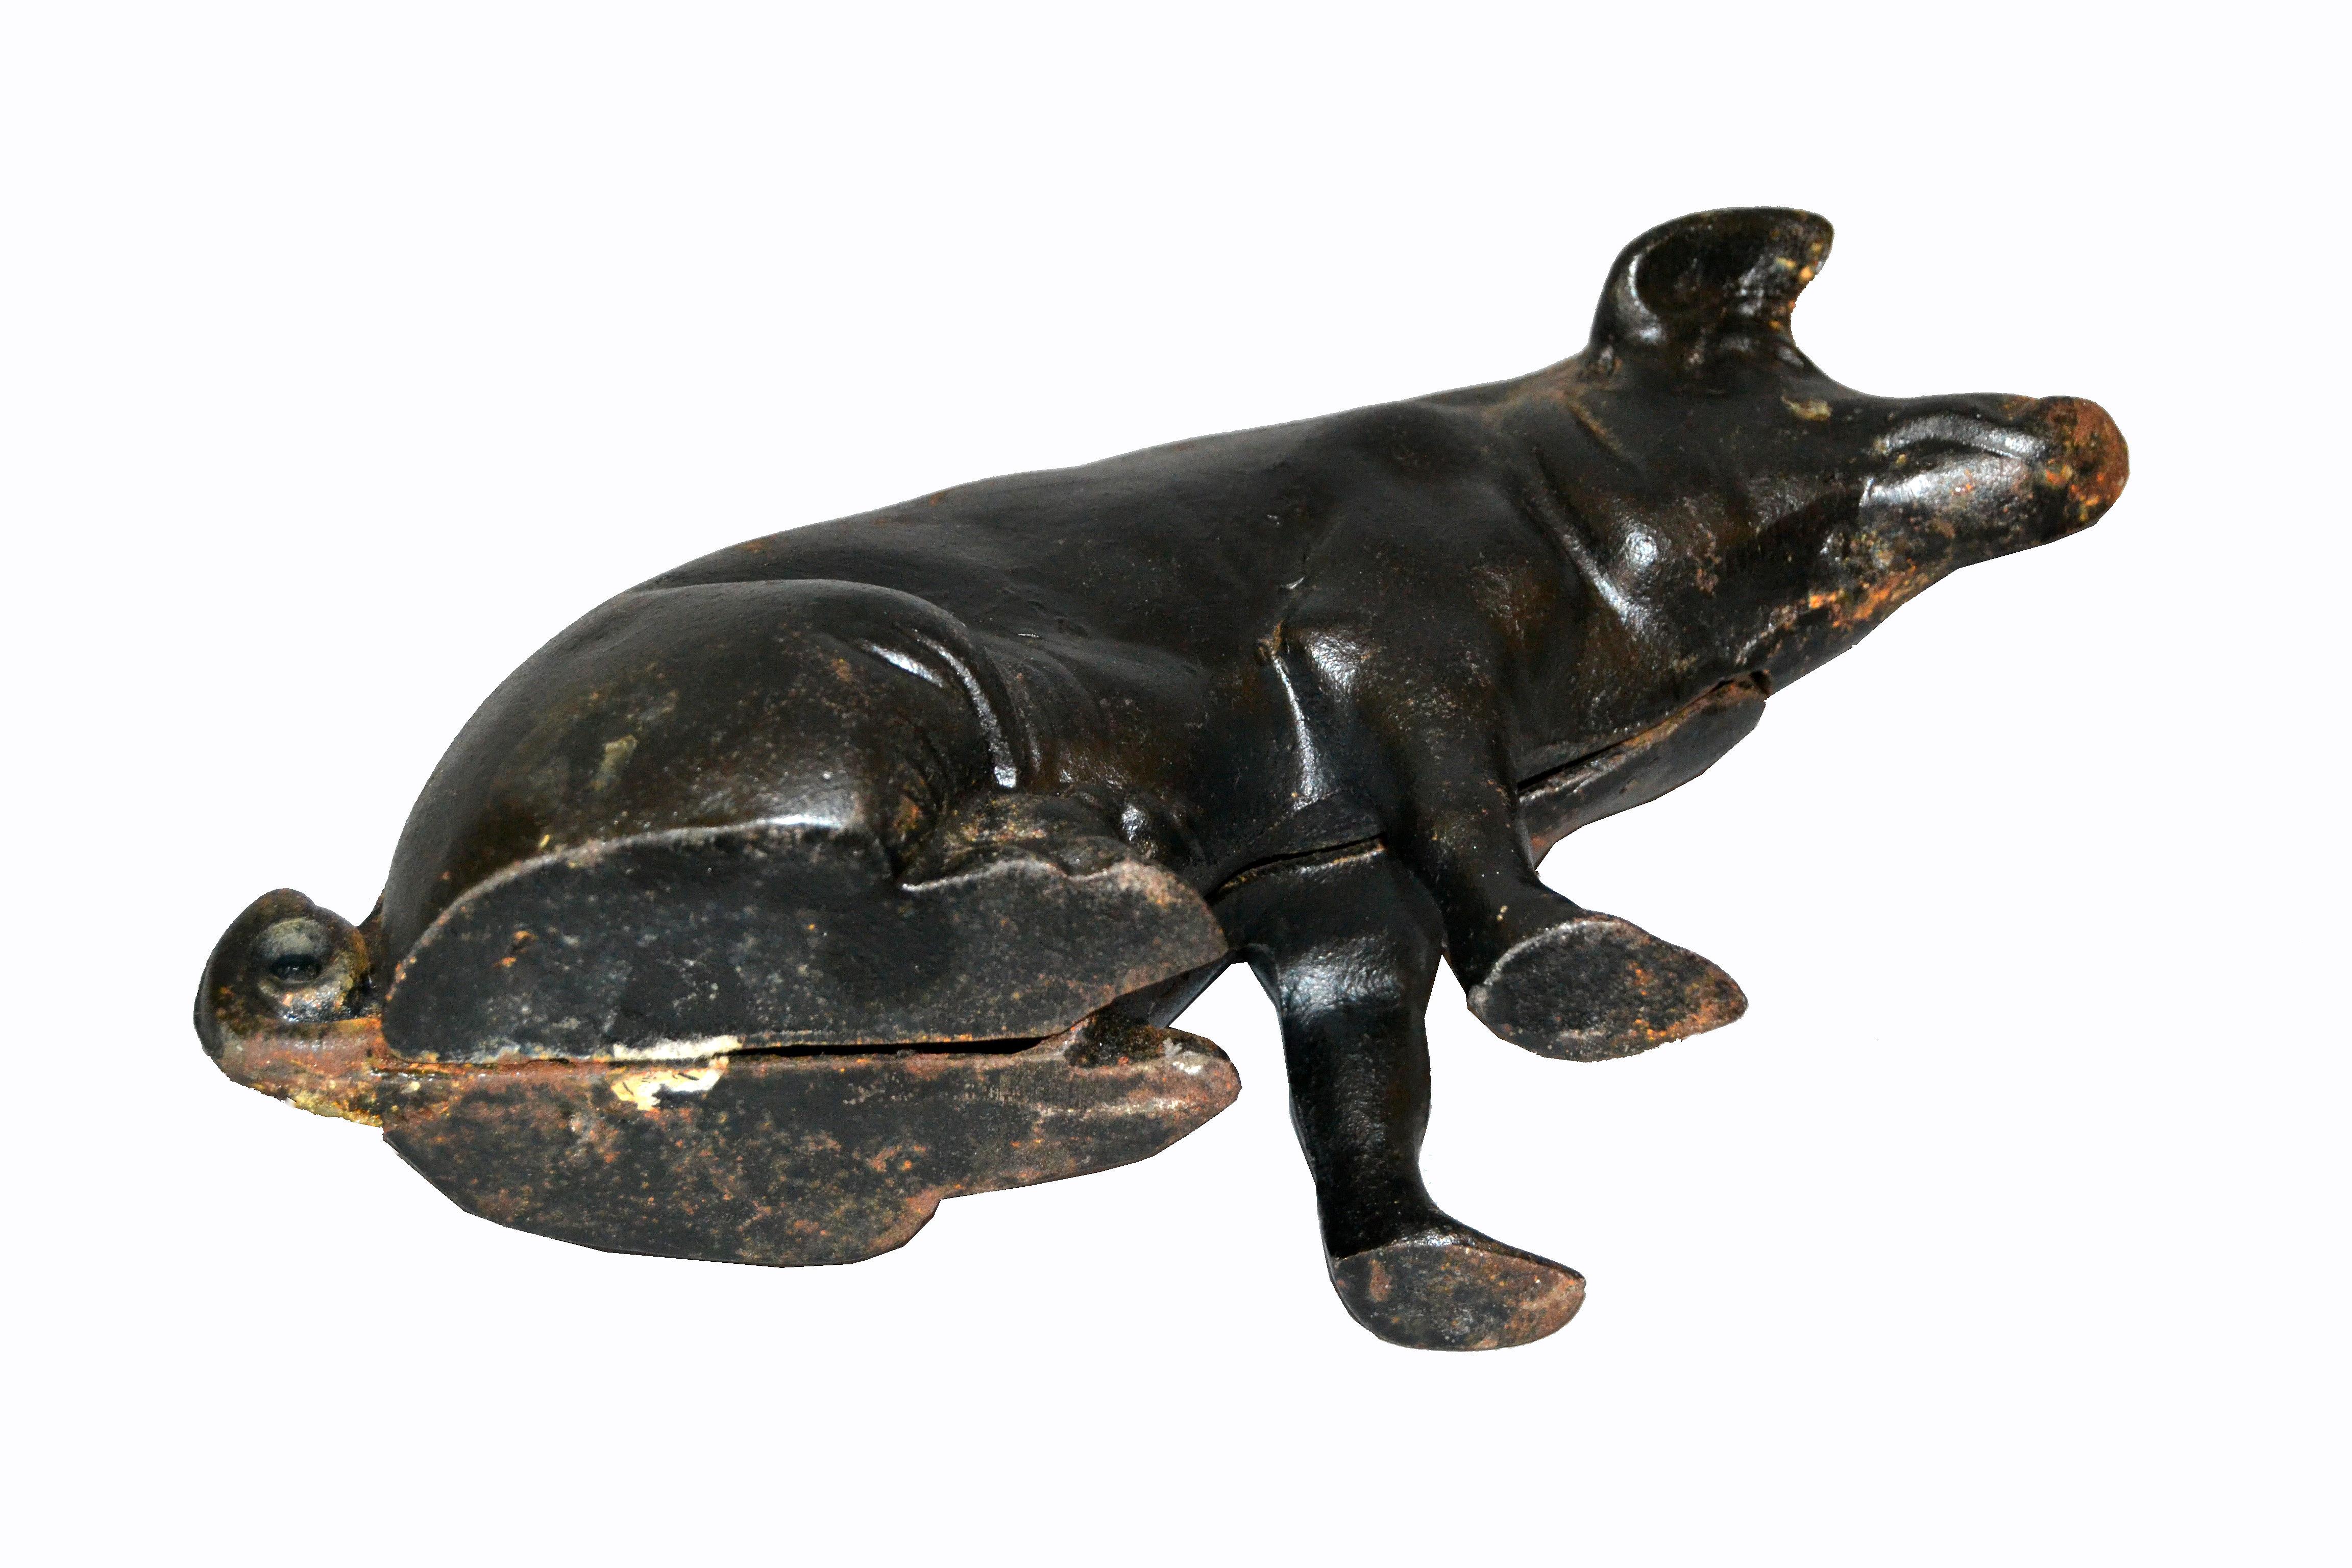 19th Century American Black Cast Iron Piggy Bank Money Box Animal Sculpture In Distressed Condition For Sale In Miami, FL